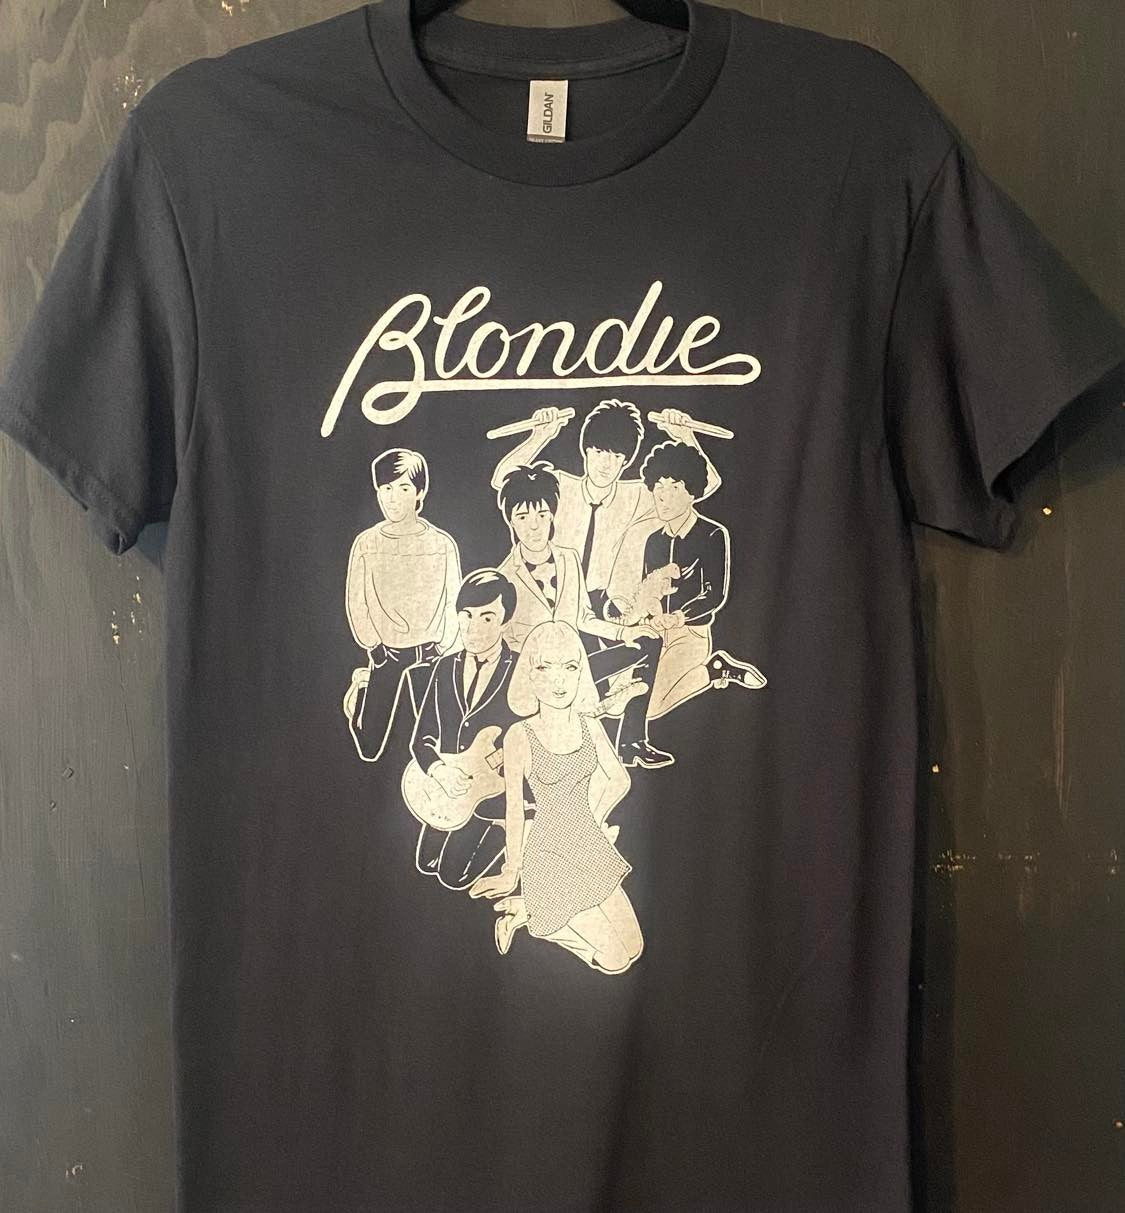 BLONDIE | band portrait t-shirt